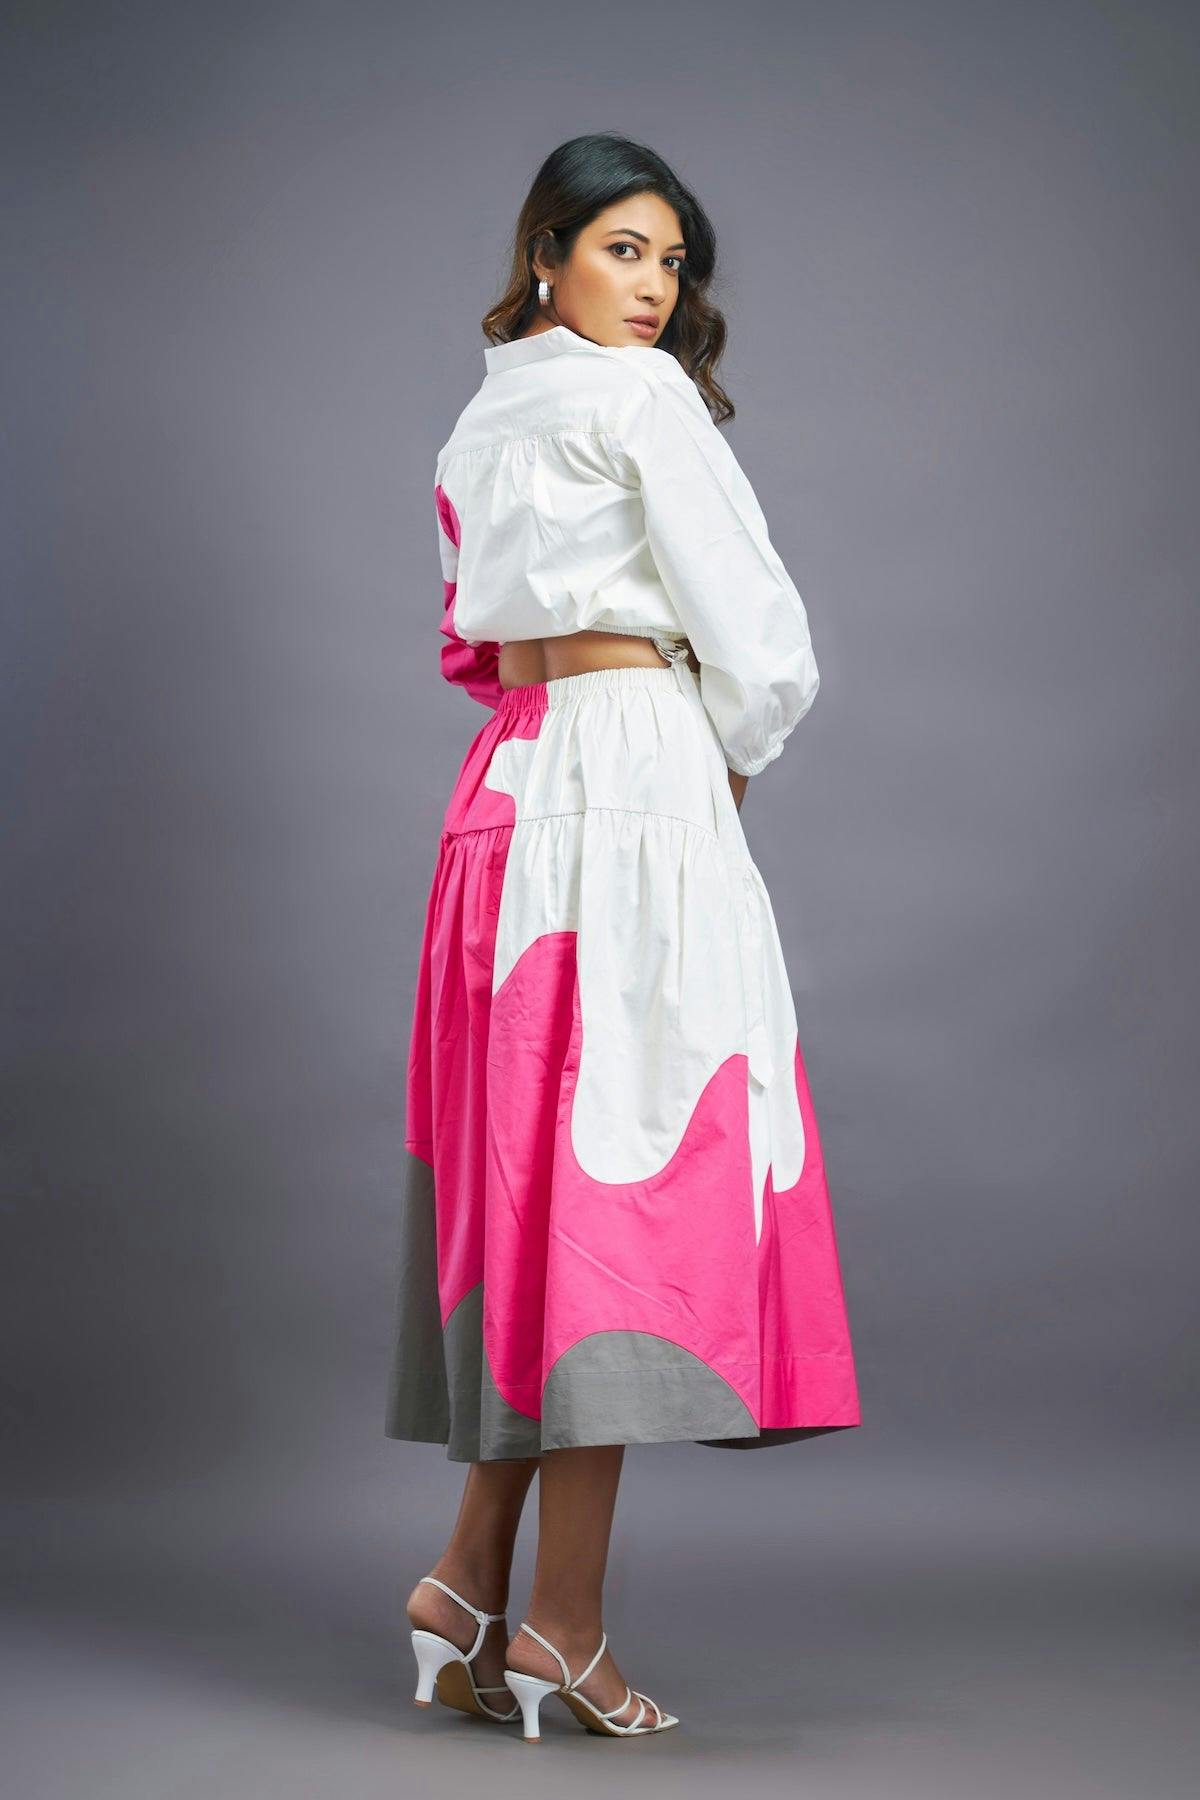 Thumbnail preview #2 for BB-1109-PG - White Pink Shirt & Skirt Co-ord Set